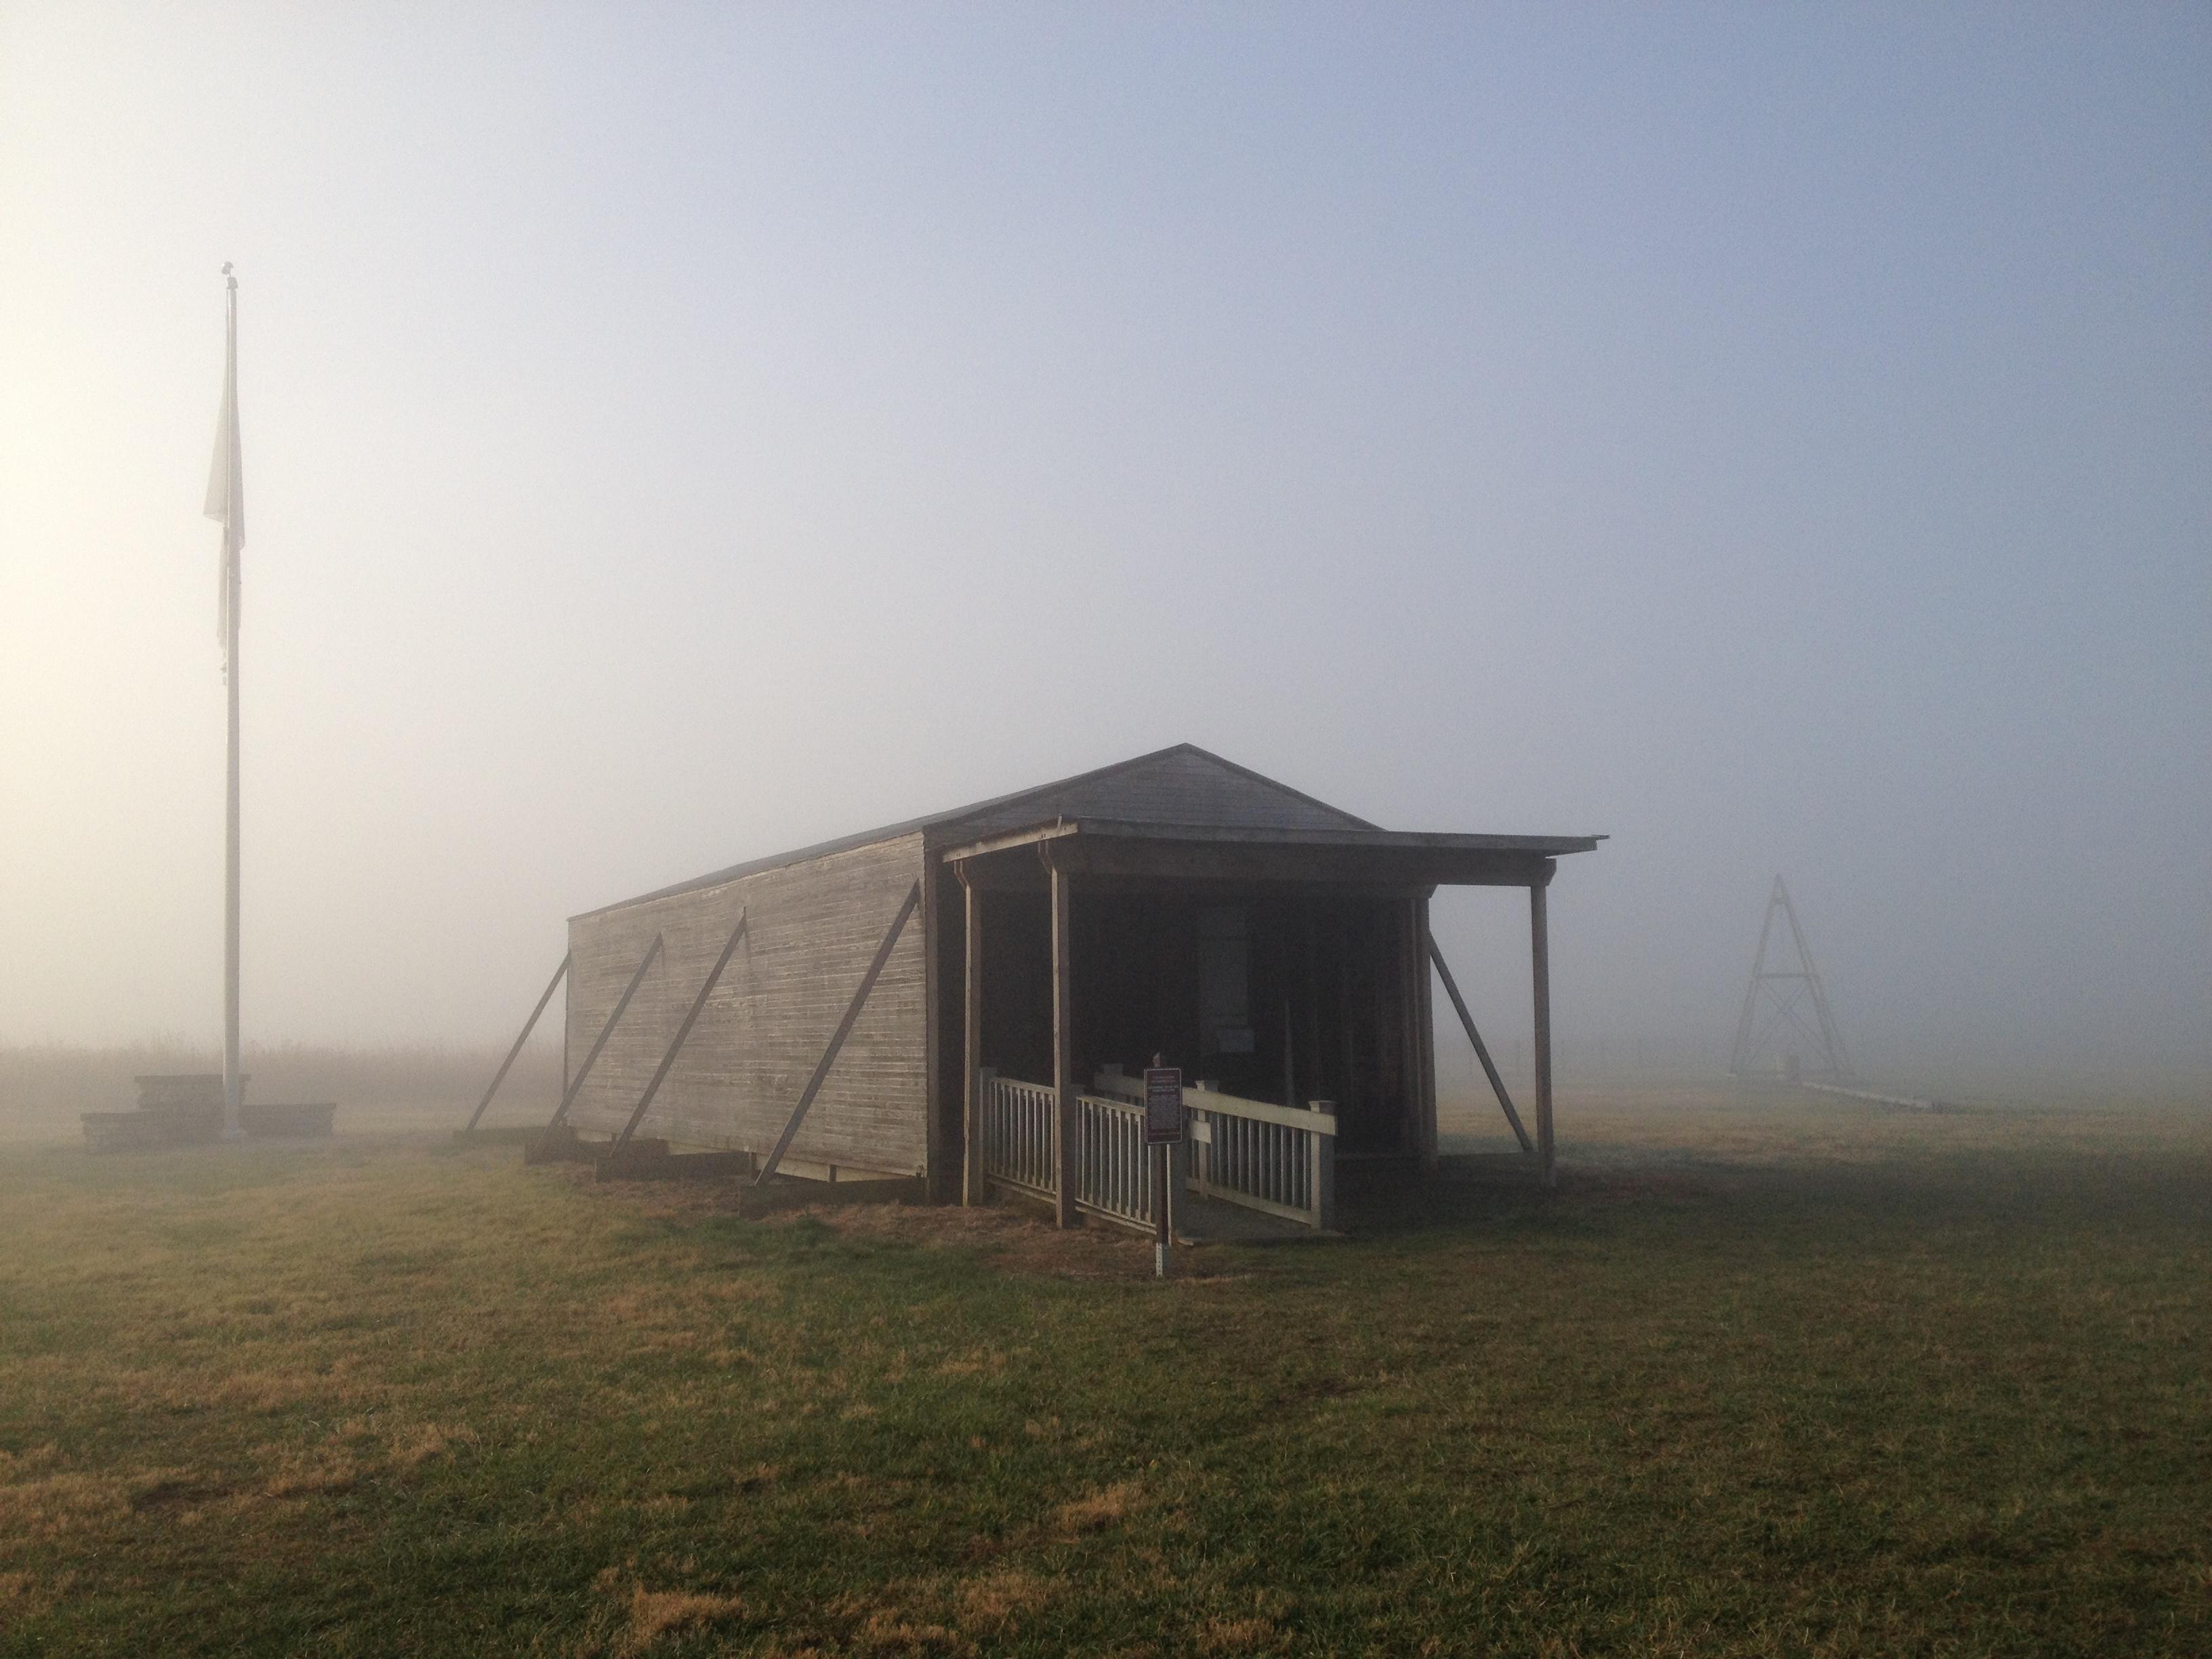 The fog lifts as the suns rays peek through the mist revealing a wood-frame hangar and flag pole.